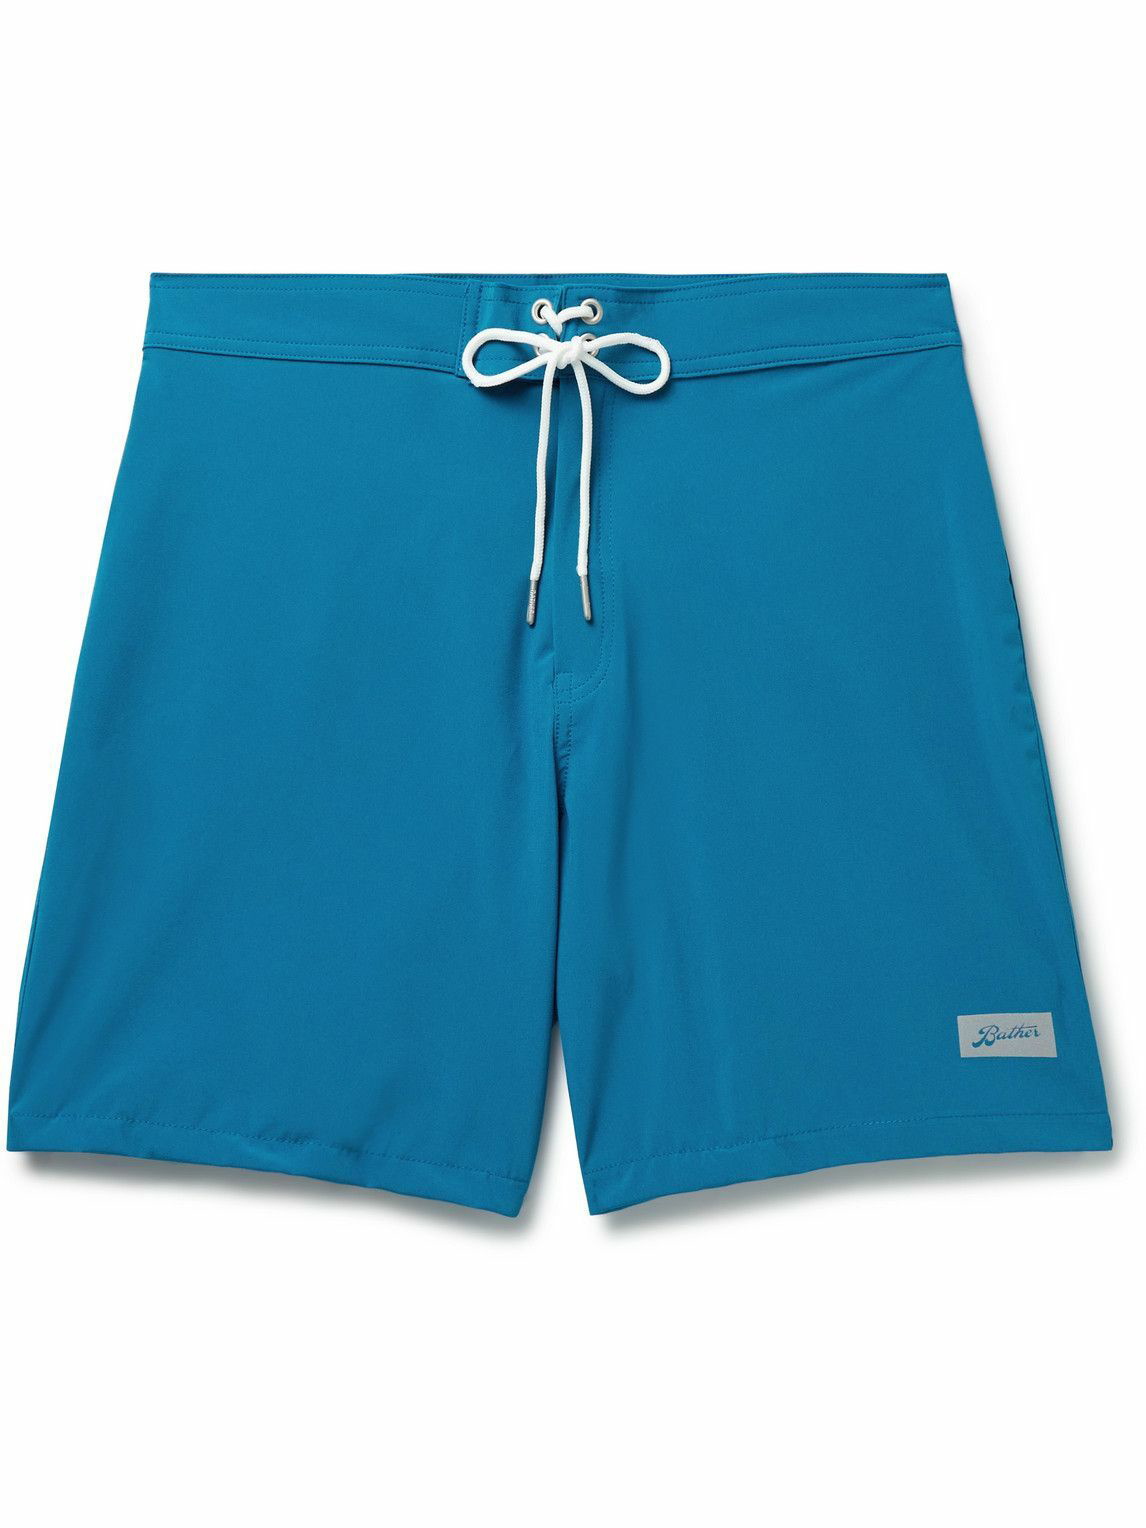 BATHER Straight-Leg Mid-Length Bandana-Print Recycled Swim Shorts for Men